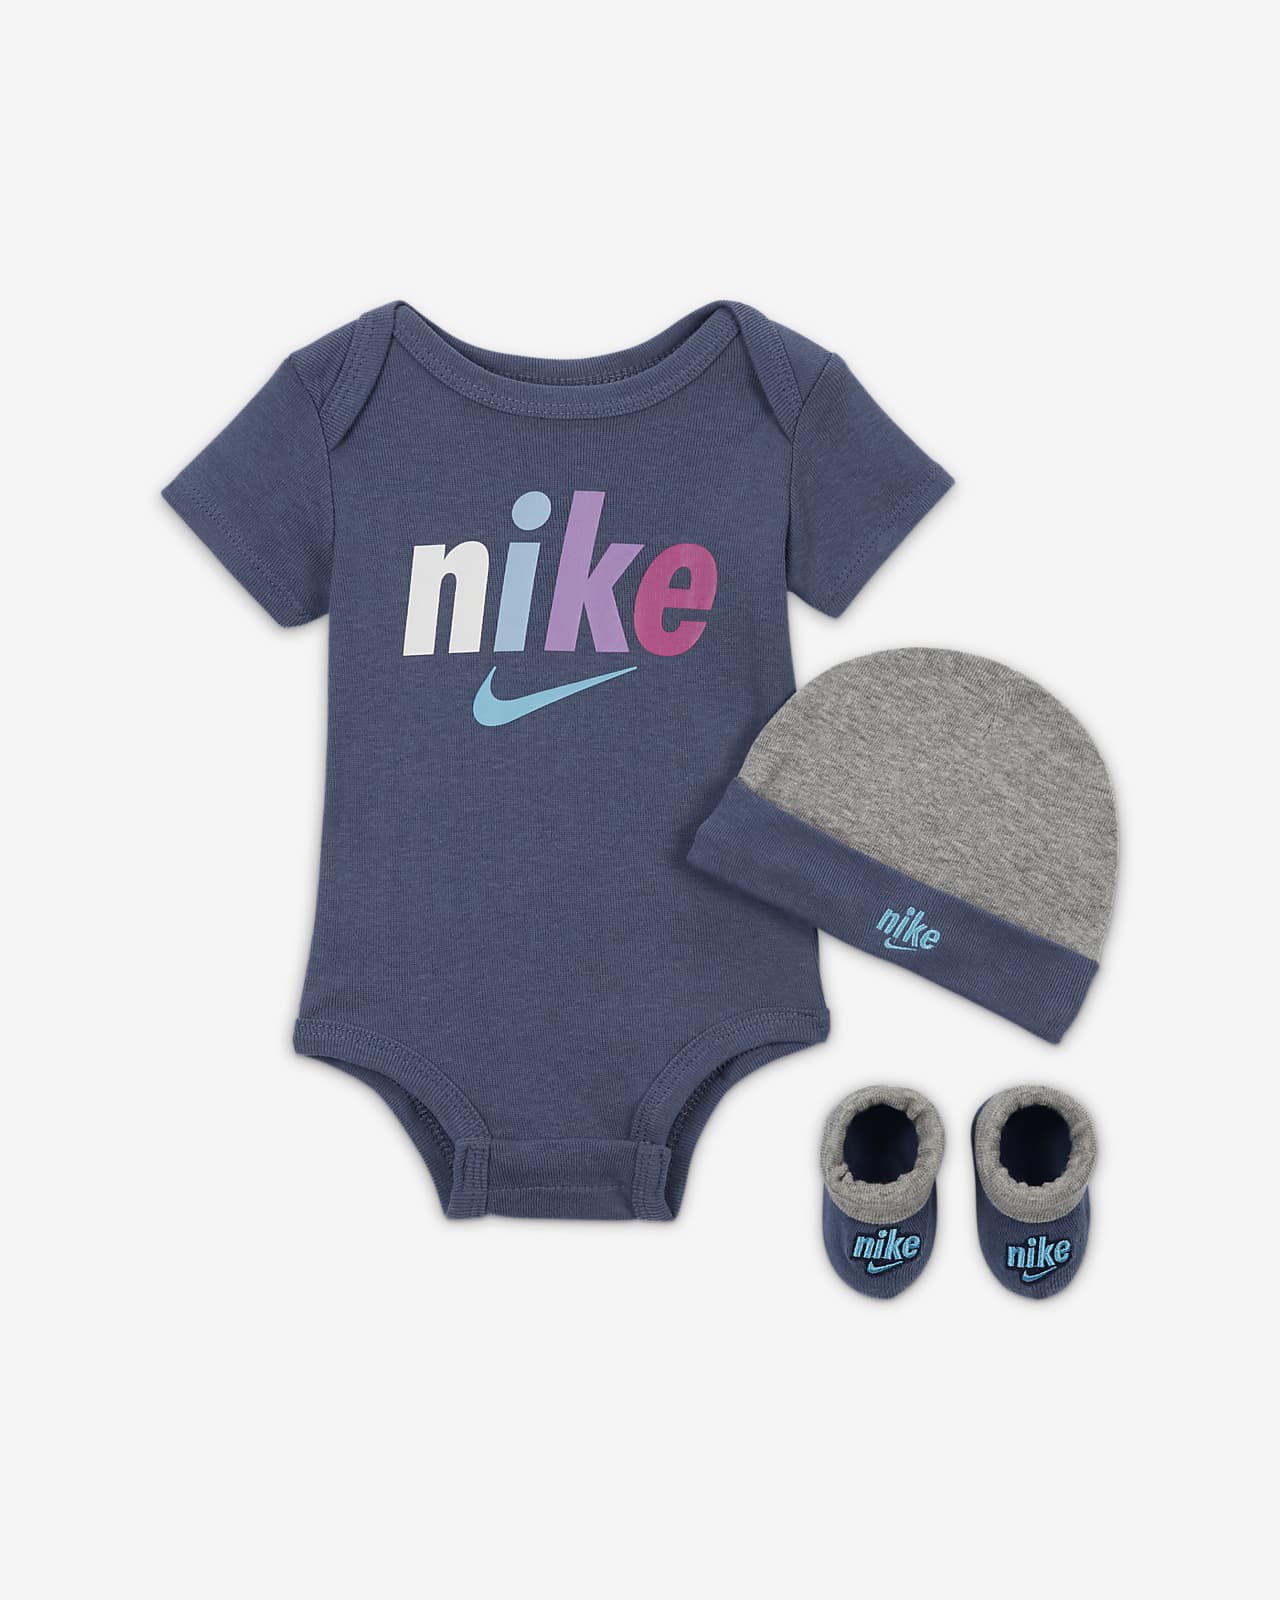 Nike 3-Piece Set. Bodysuit Box Set Bodysuit Baby